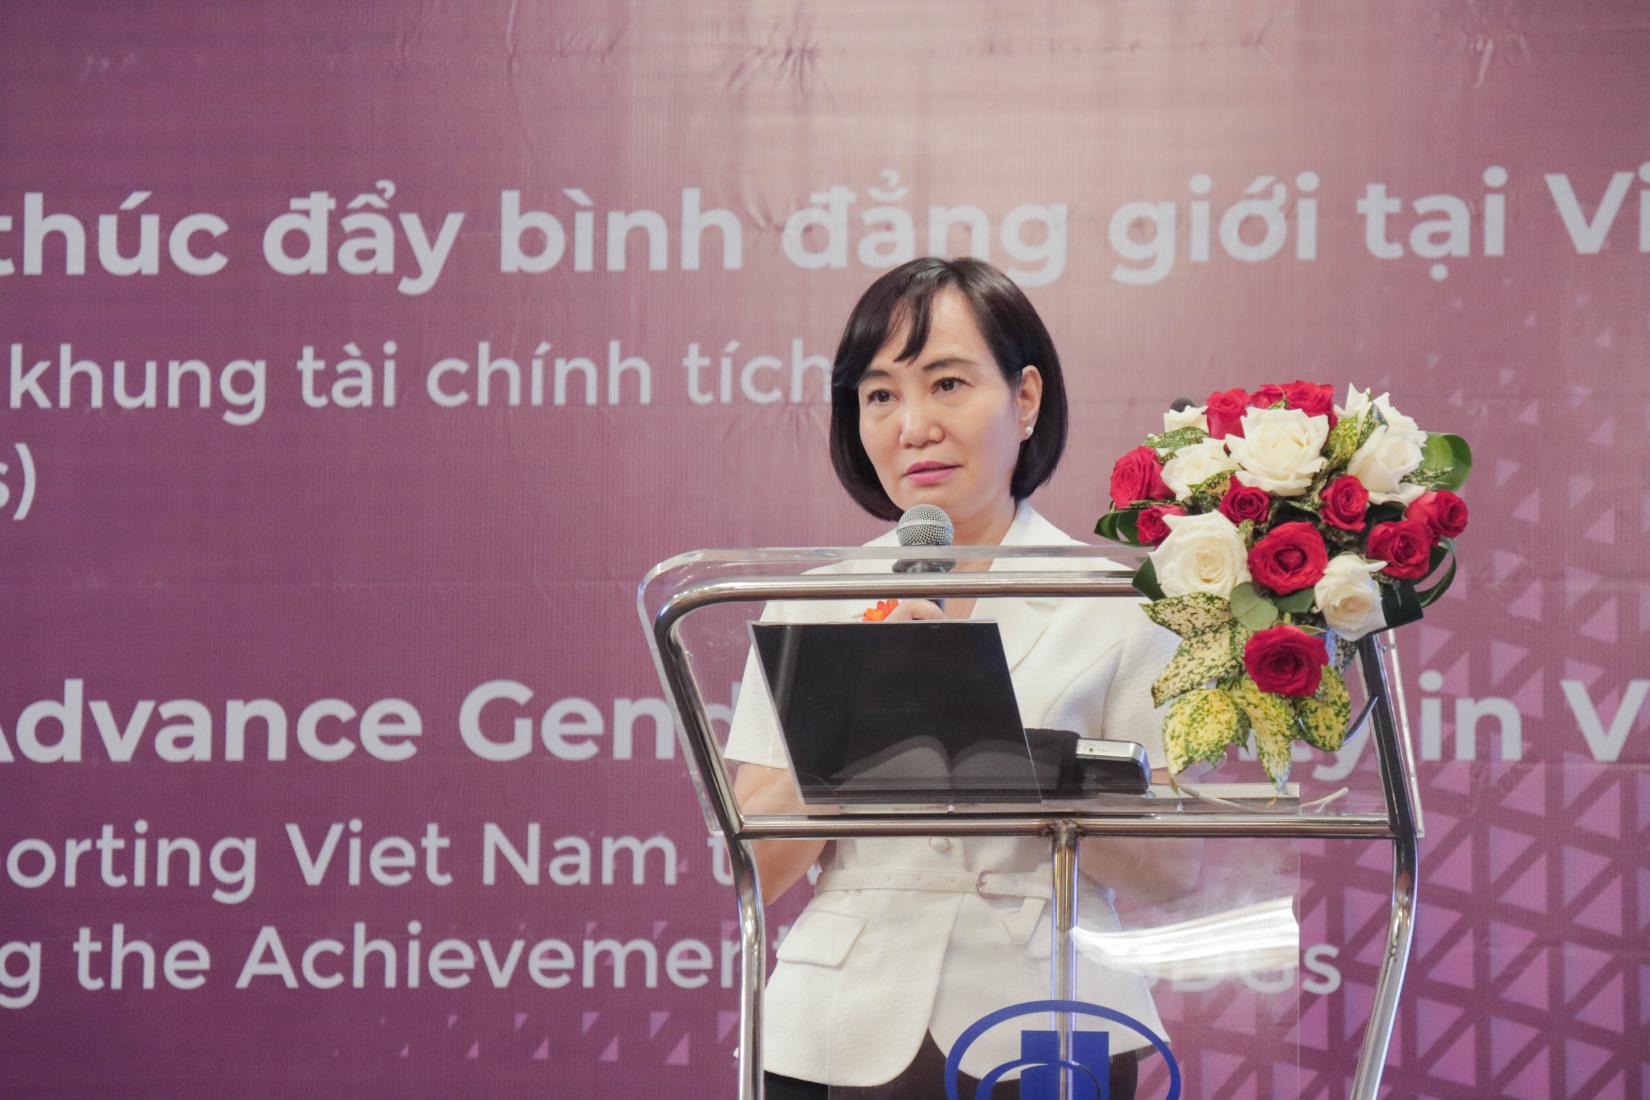 Ms. Nguyen Thu Giang, Deputy Director of LIGHT Institute